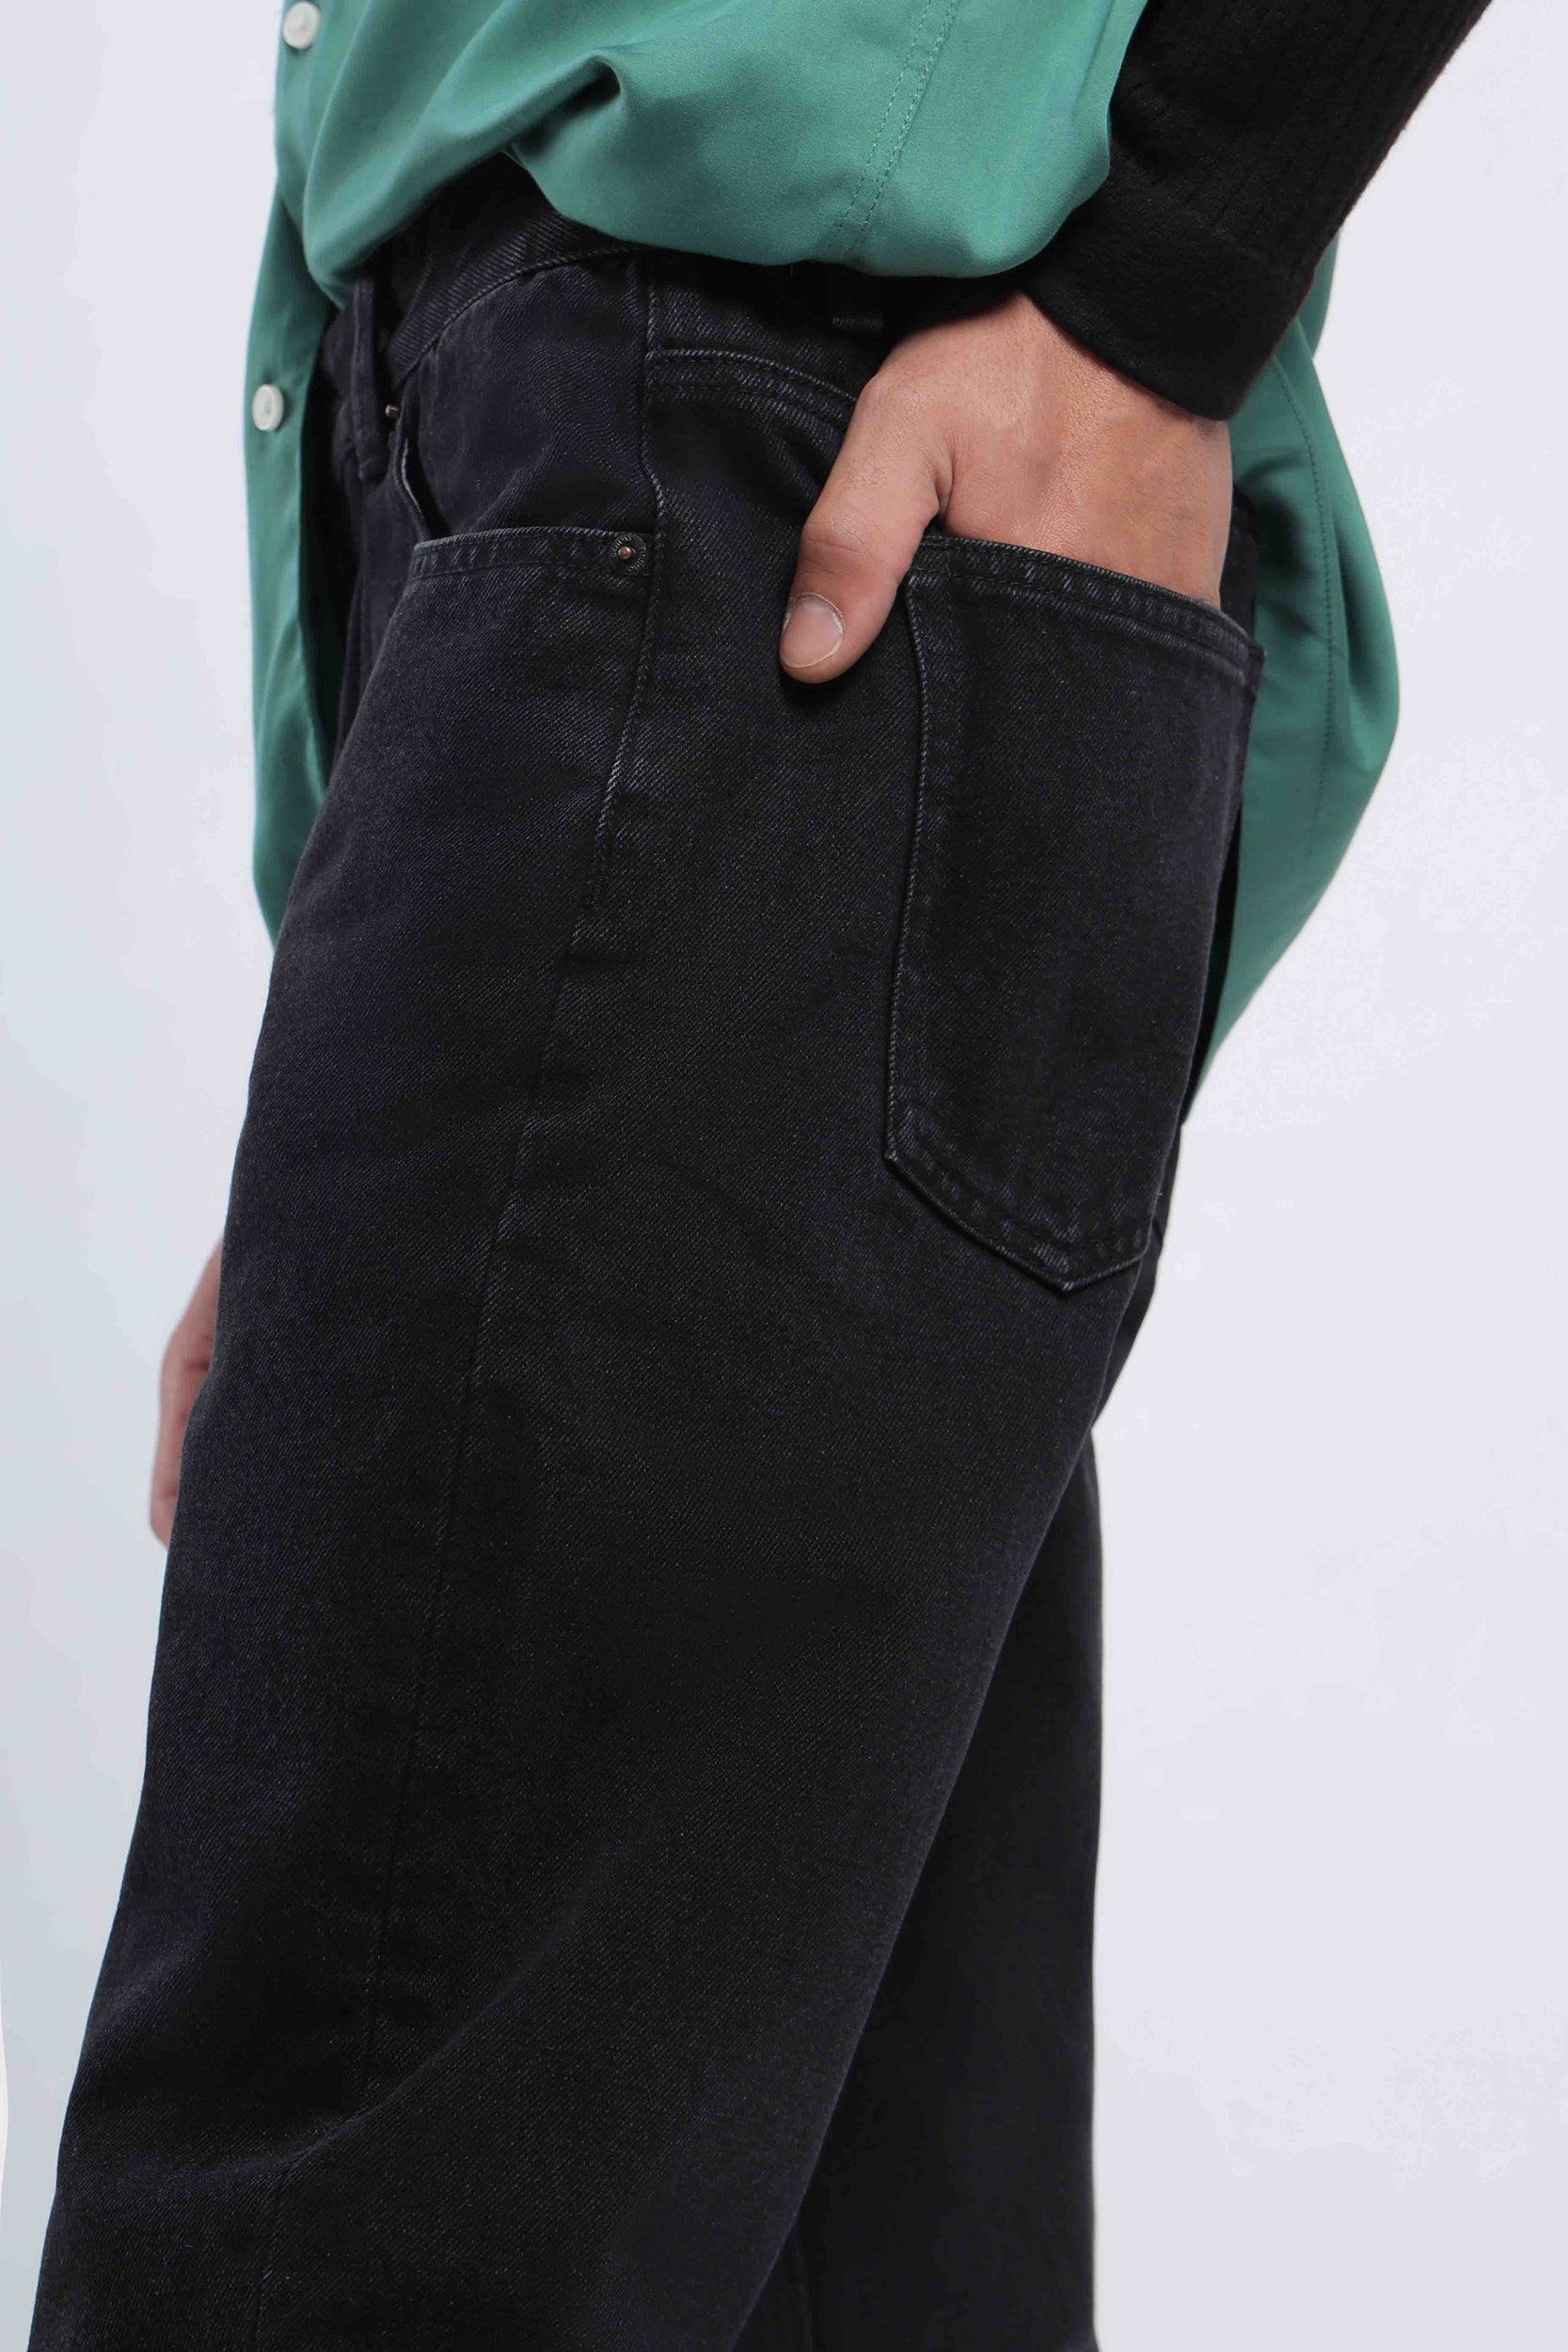 Buy Men Black Slim Fit Solid Casual Trousers Online  785439  Allen Solly